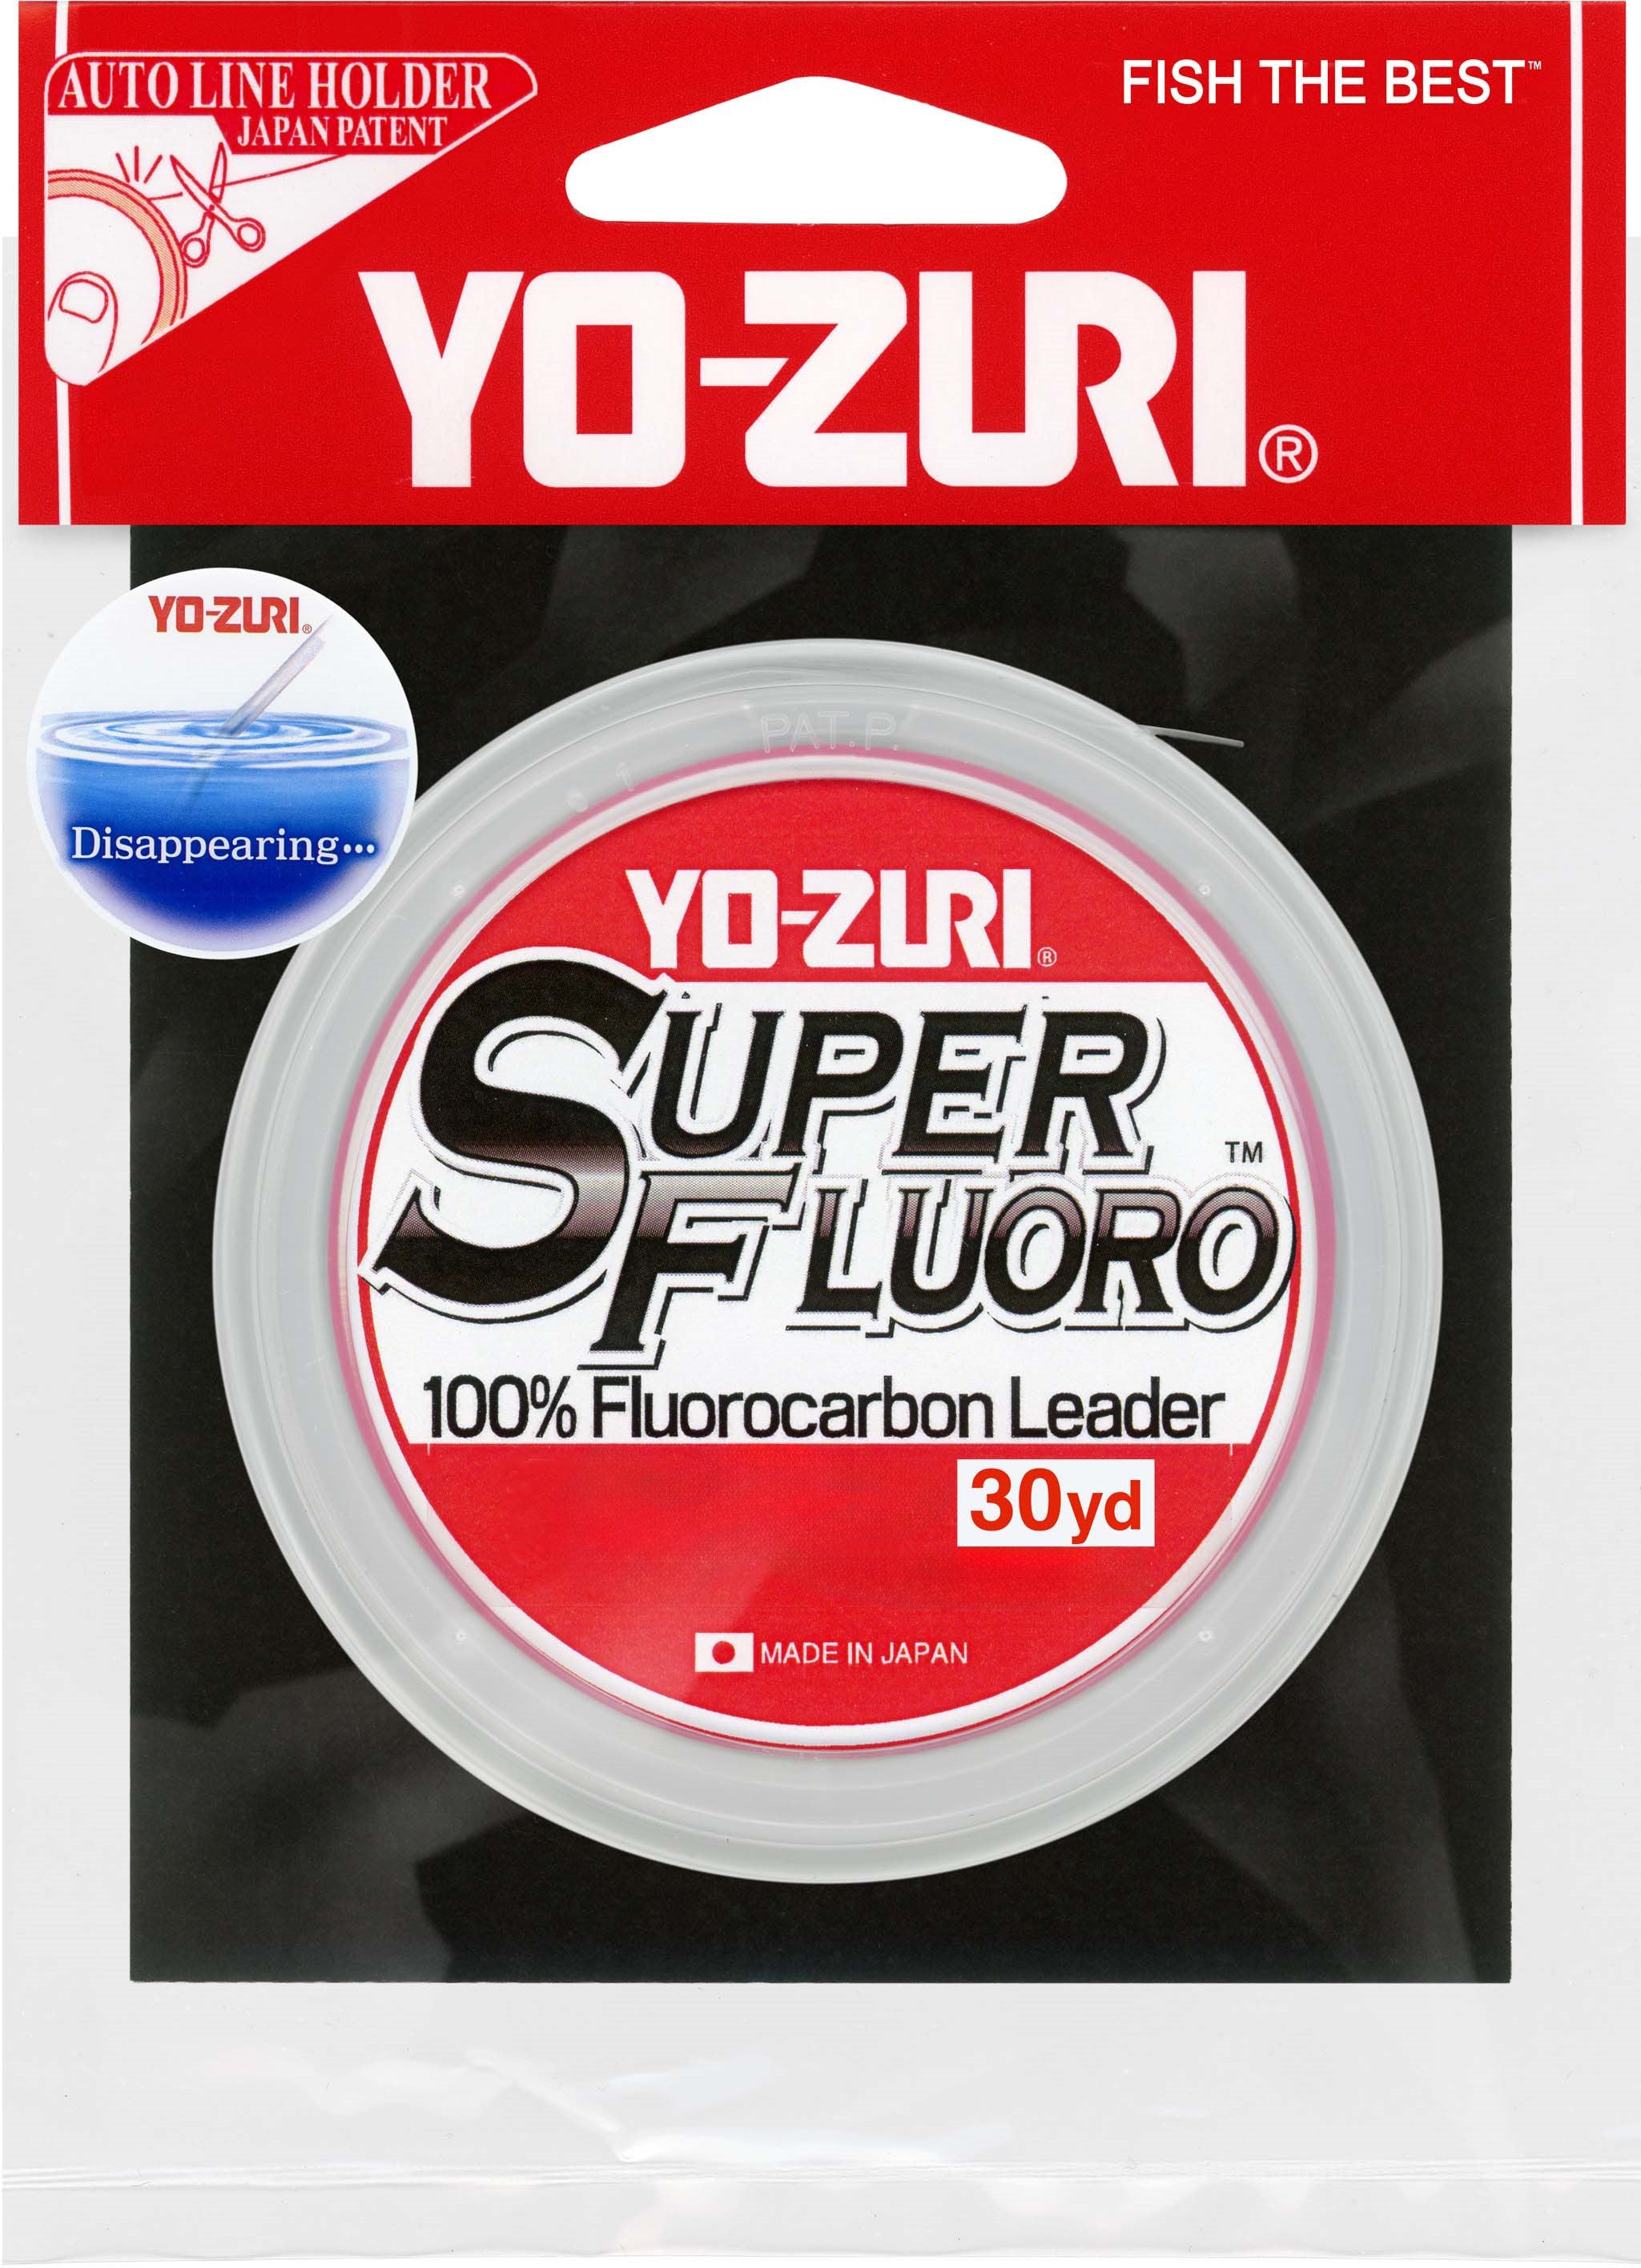 Yozuri Hybrid Copolymer Fishing Line Product Review